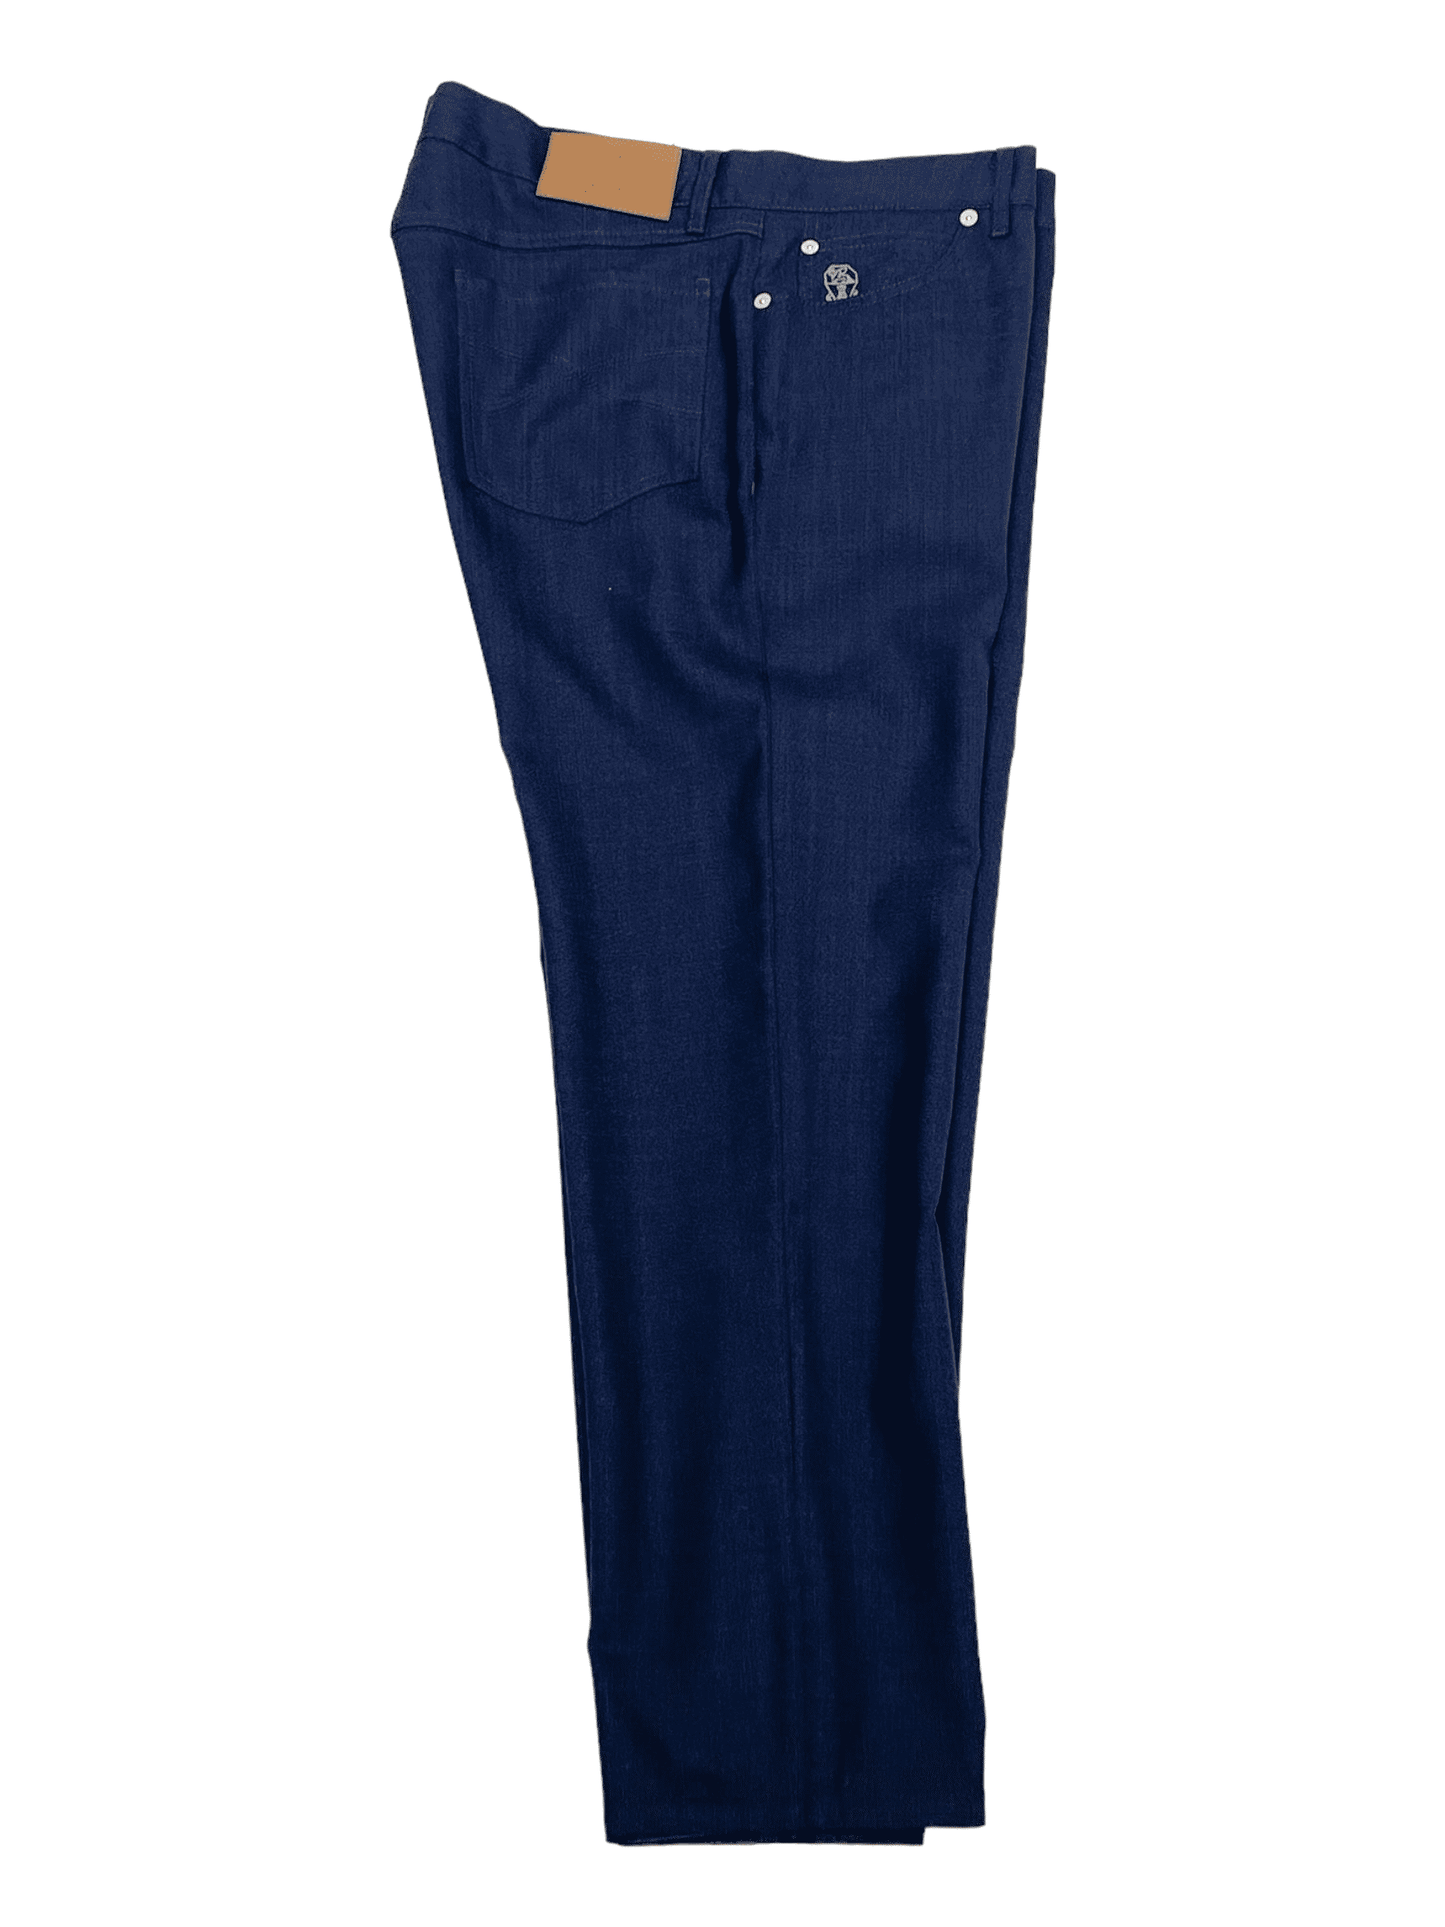 Brunello Cucinelli Navy Wool 5 Pocket Dress Pant 34W 26L